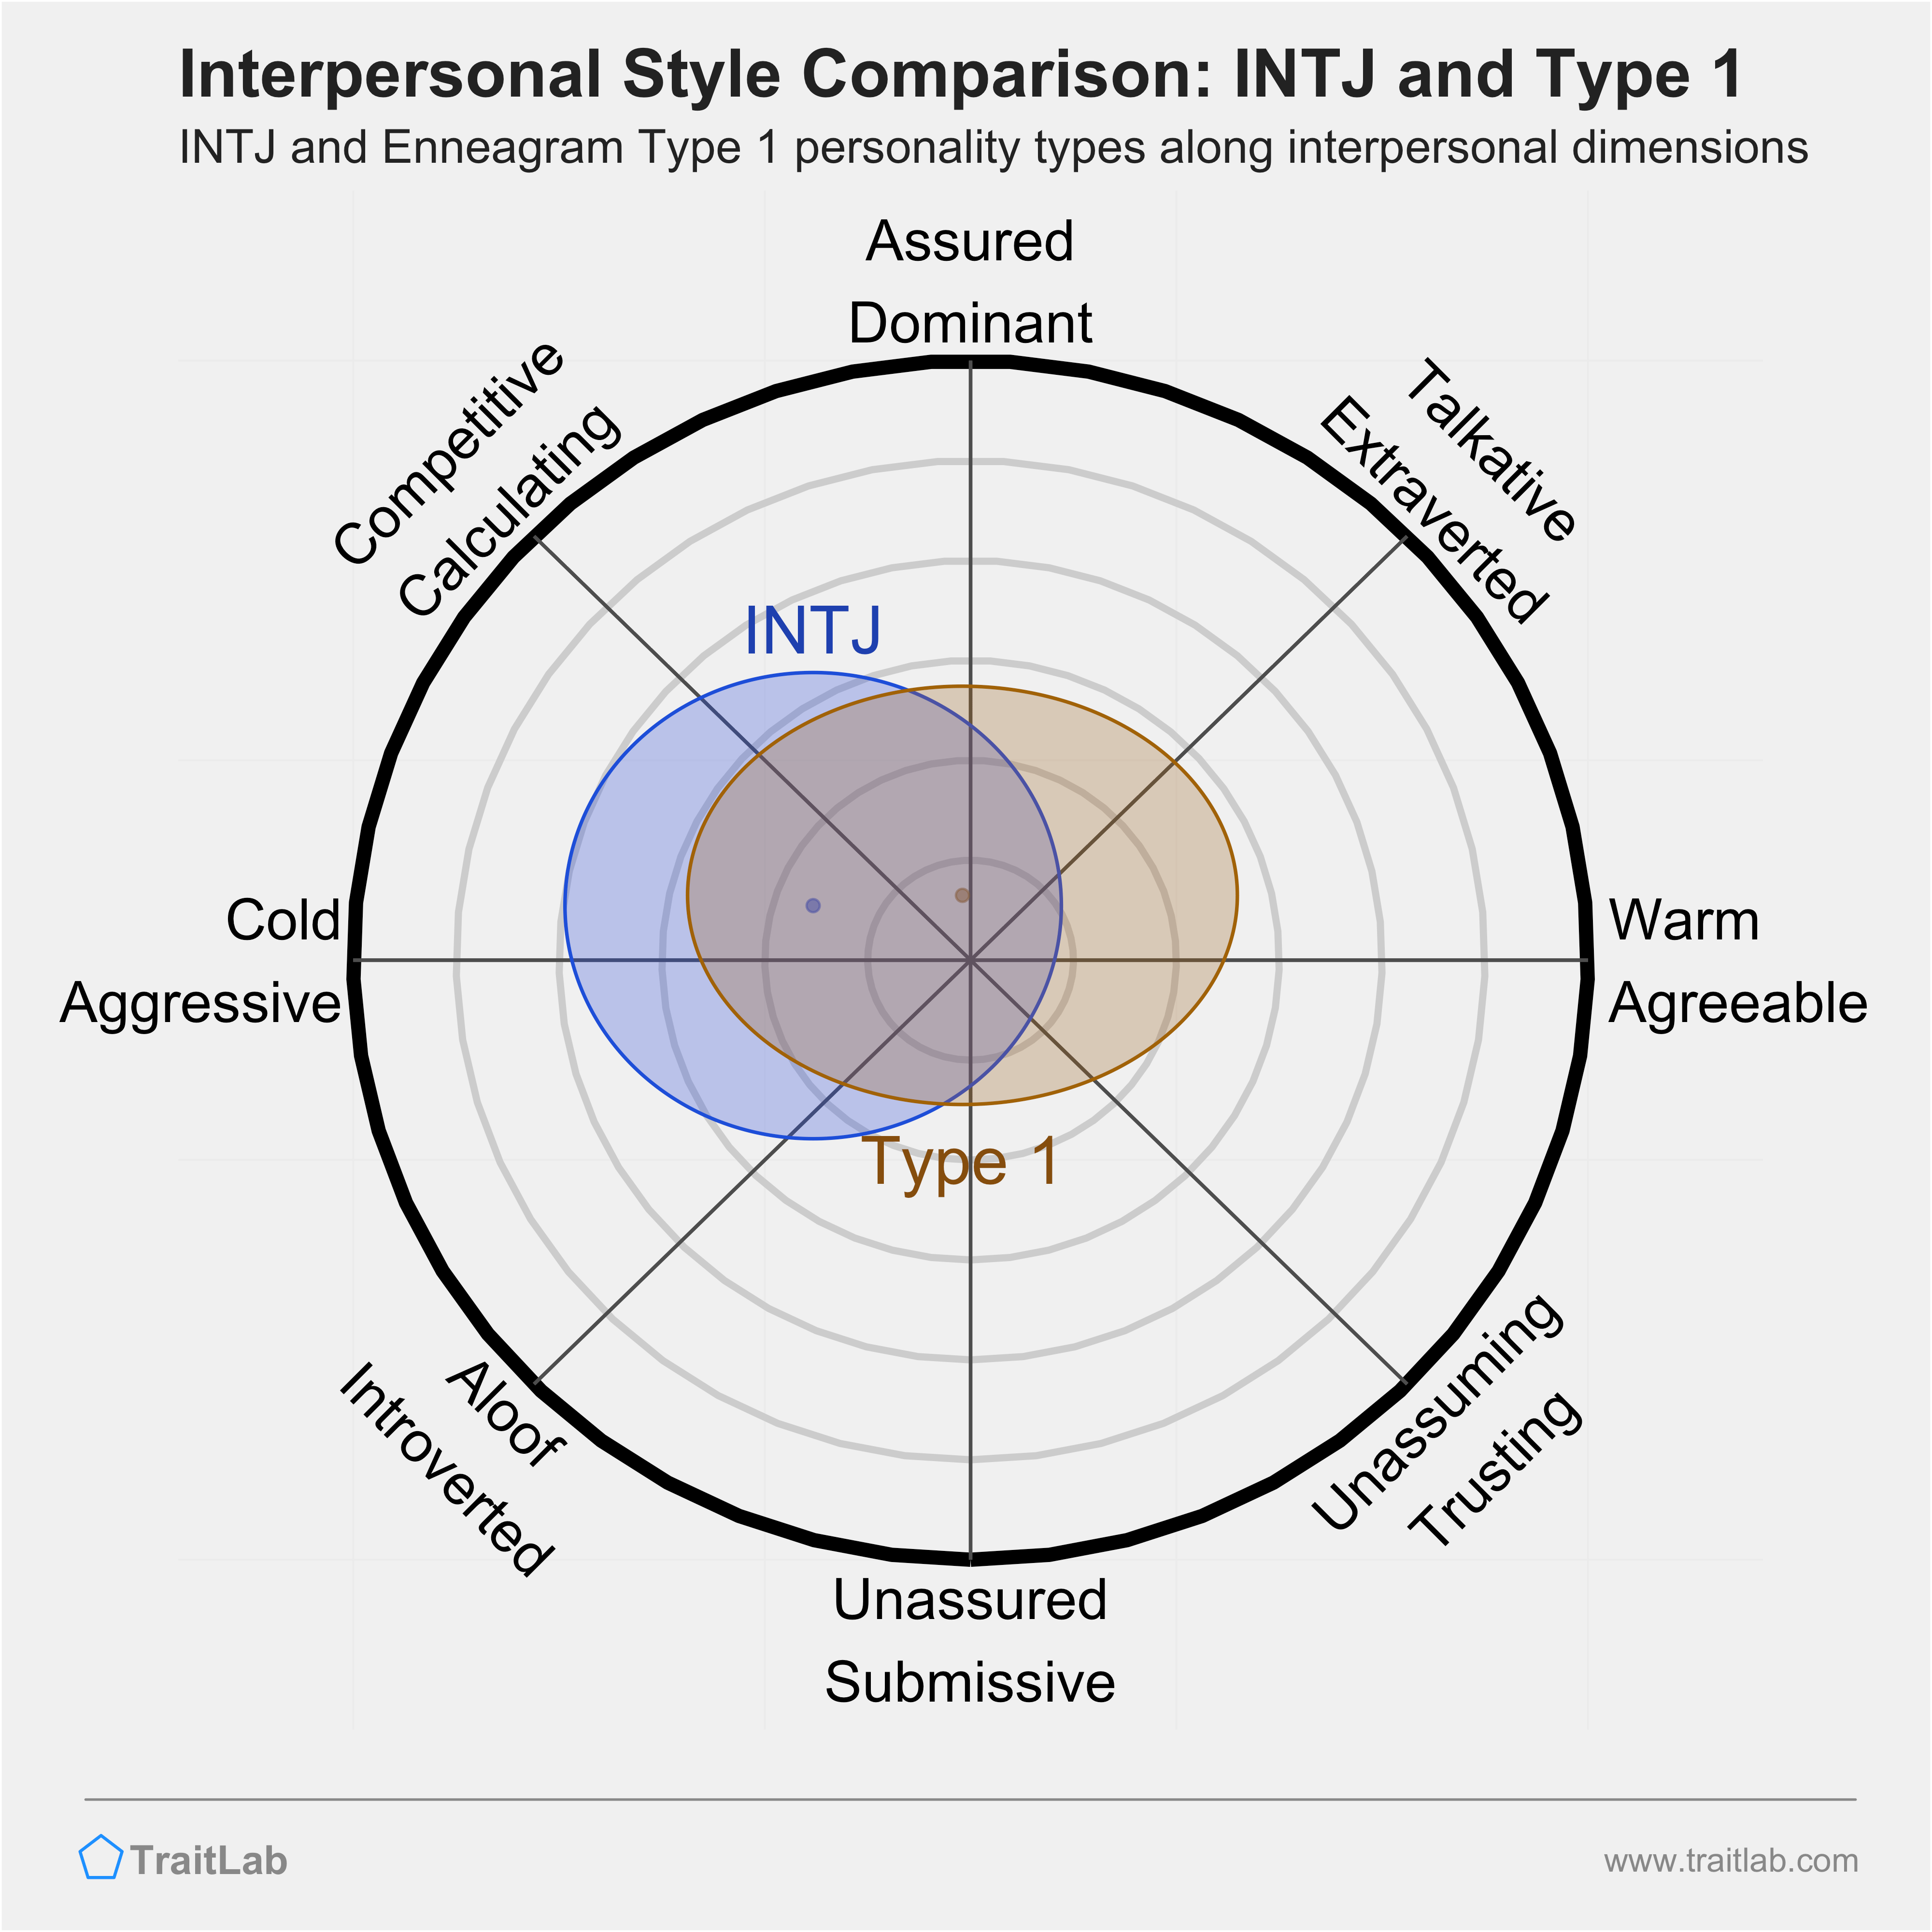 Enneagram INTJ and Type 1 comparison across interpersonal dimensions